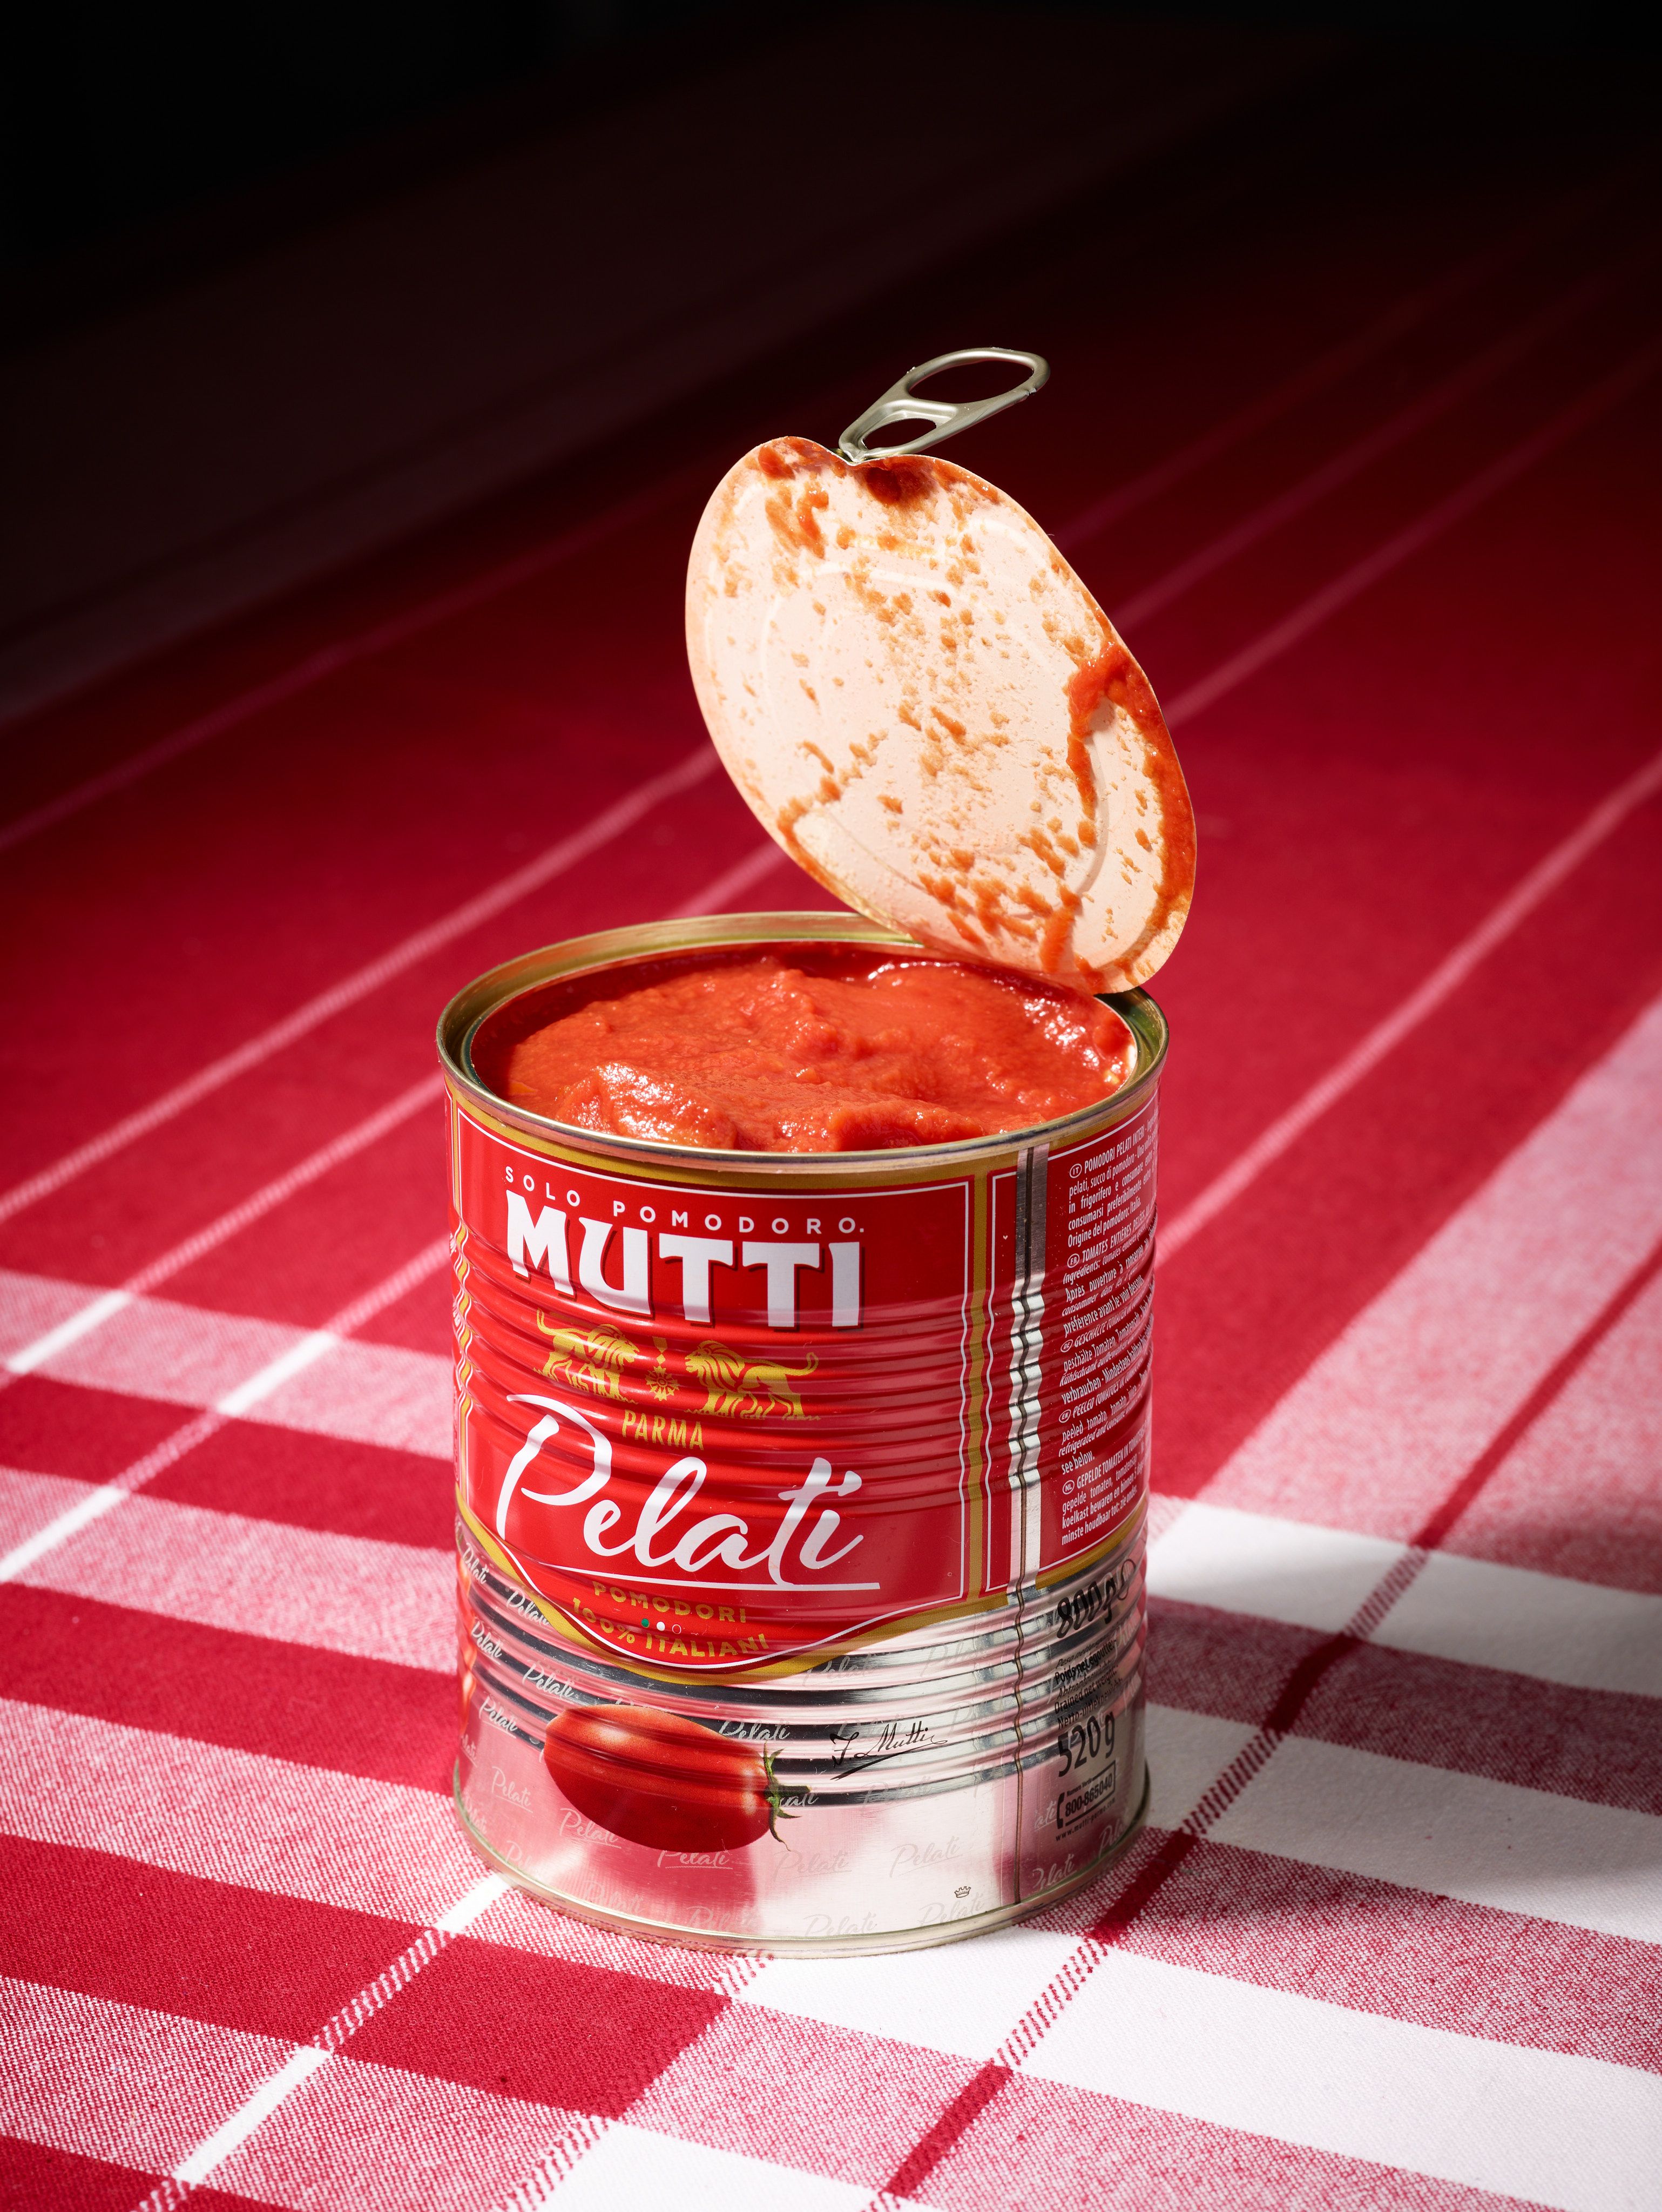 A tin of peeled pomodoro tomatoes